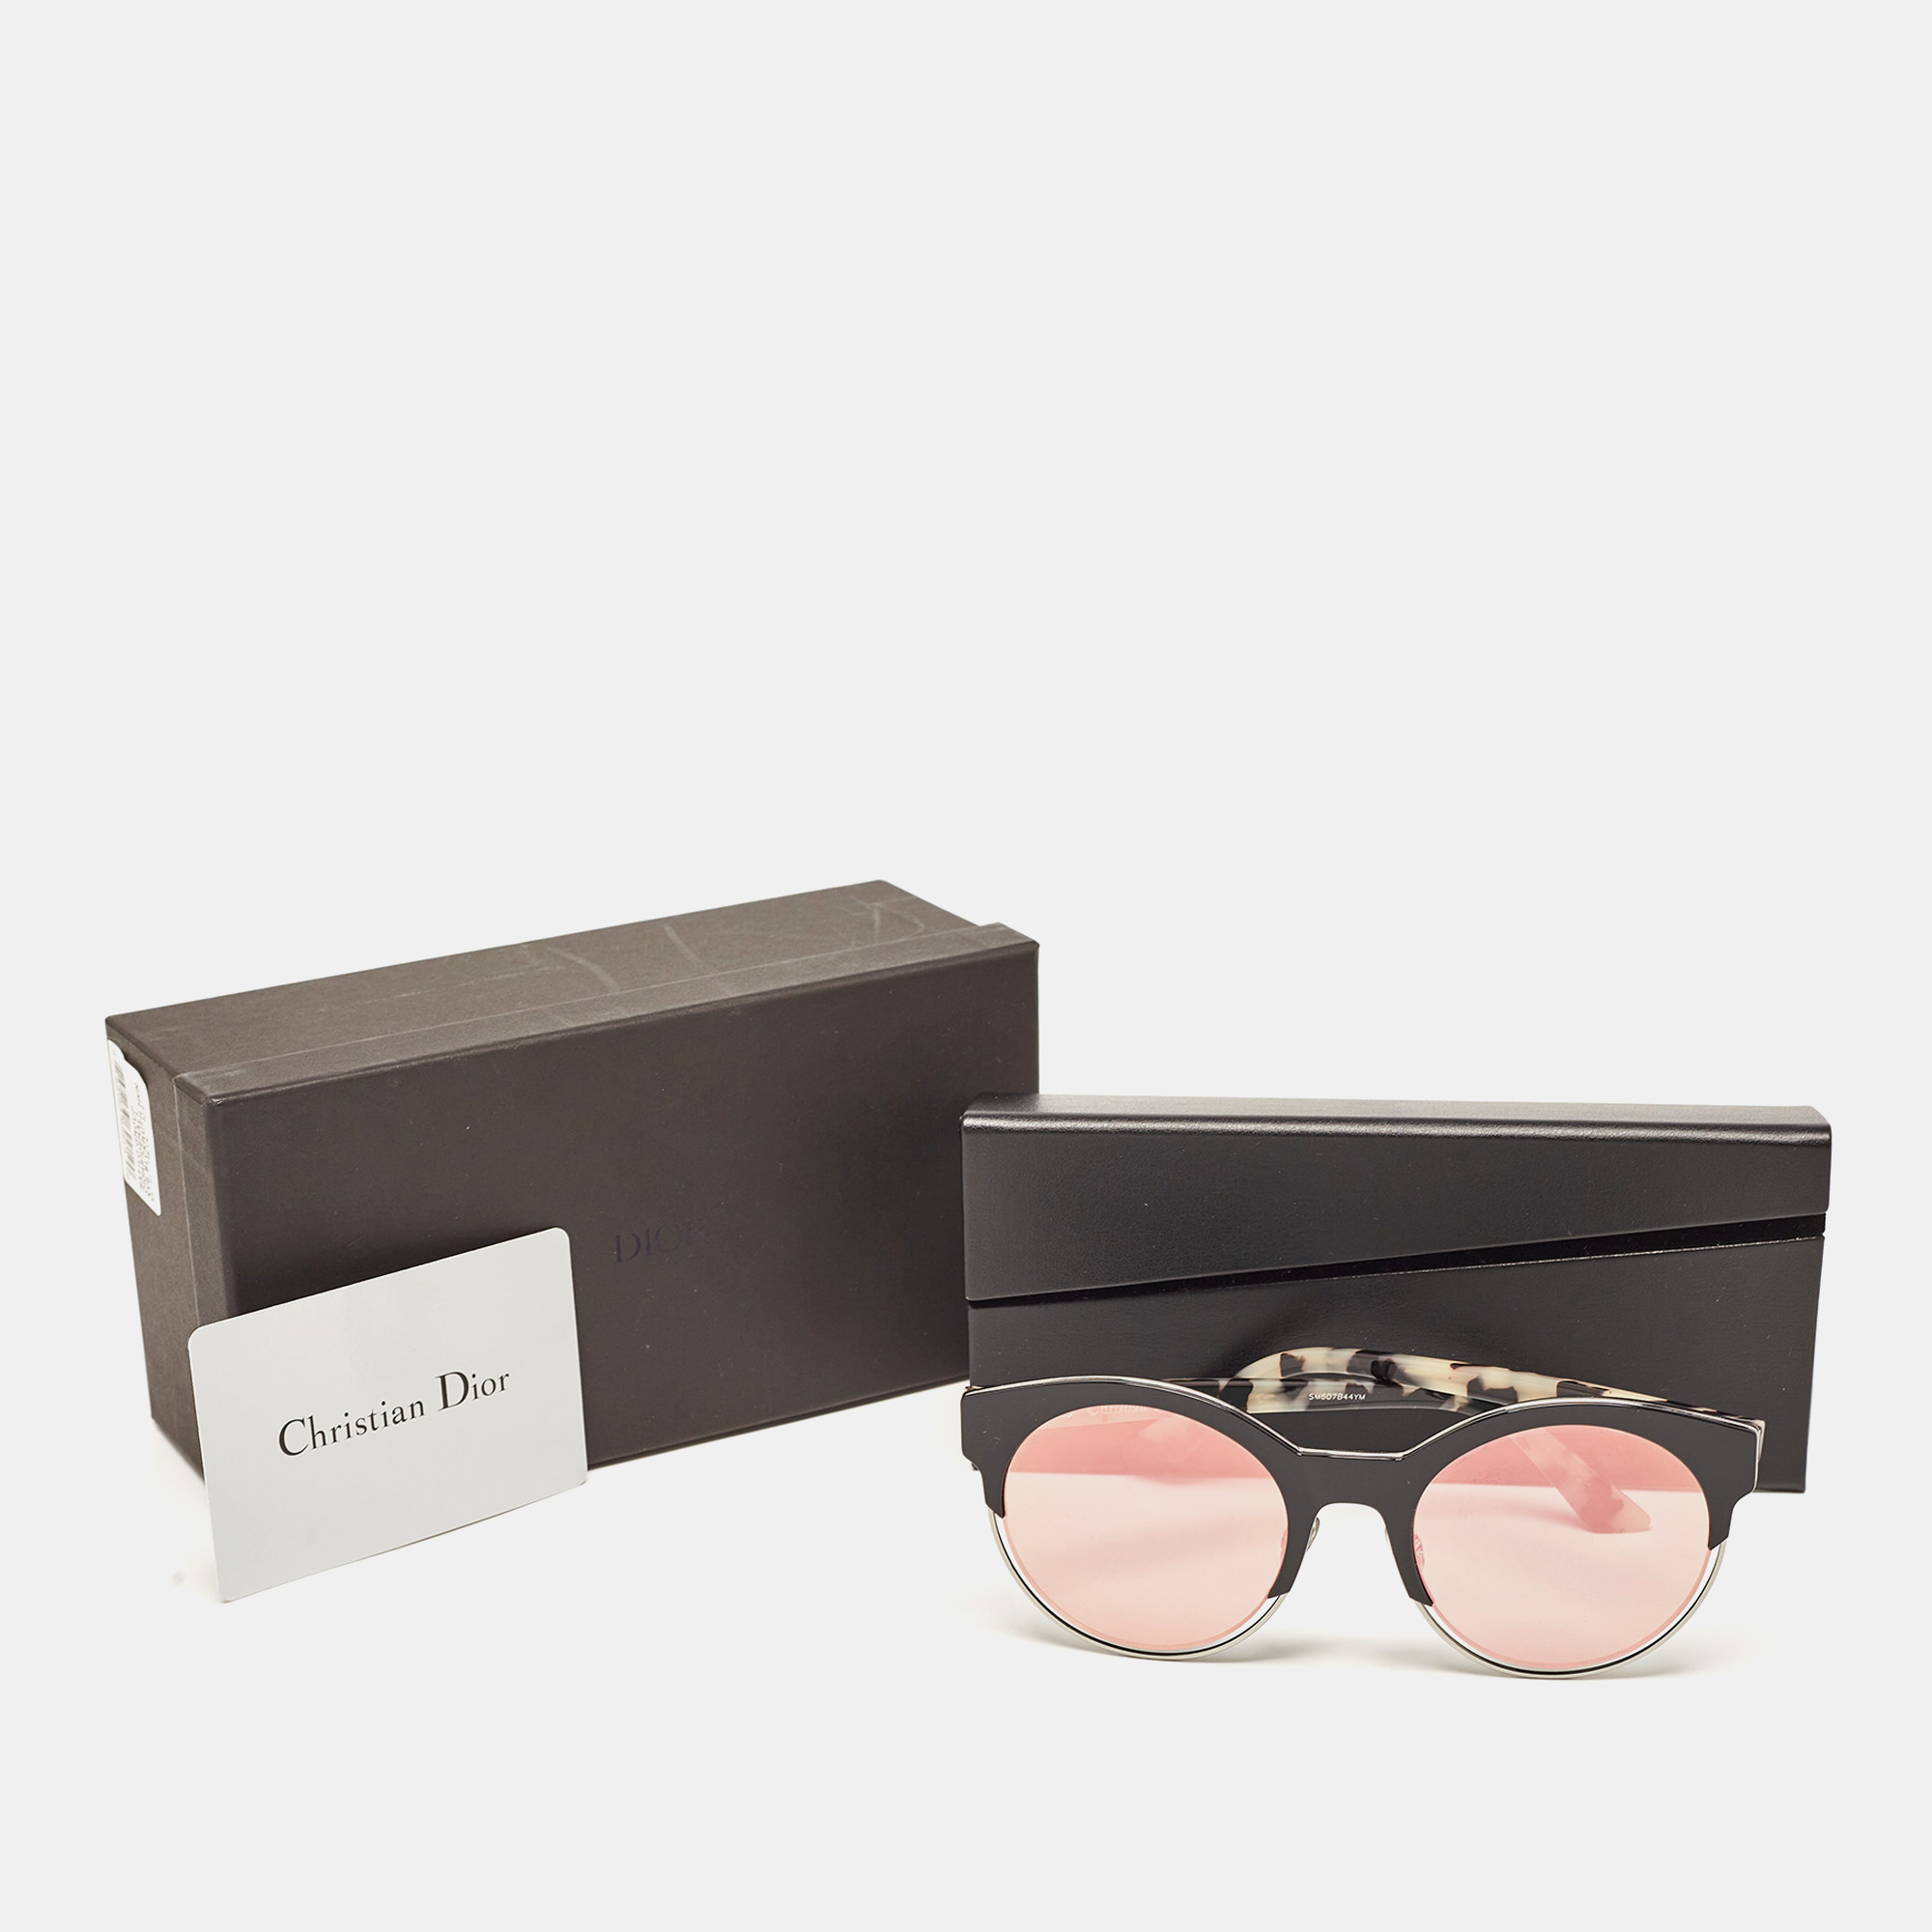 Dior Green/Pink Mirrored DiorSideral1 Round Sunglasses